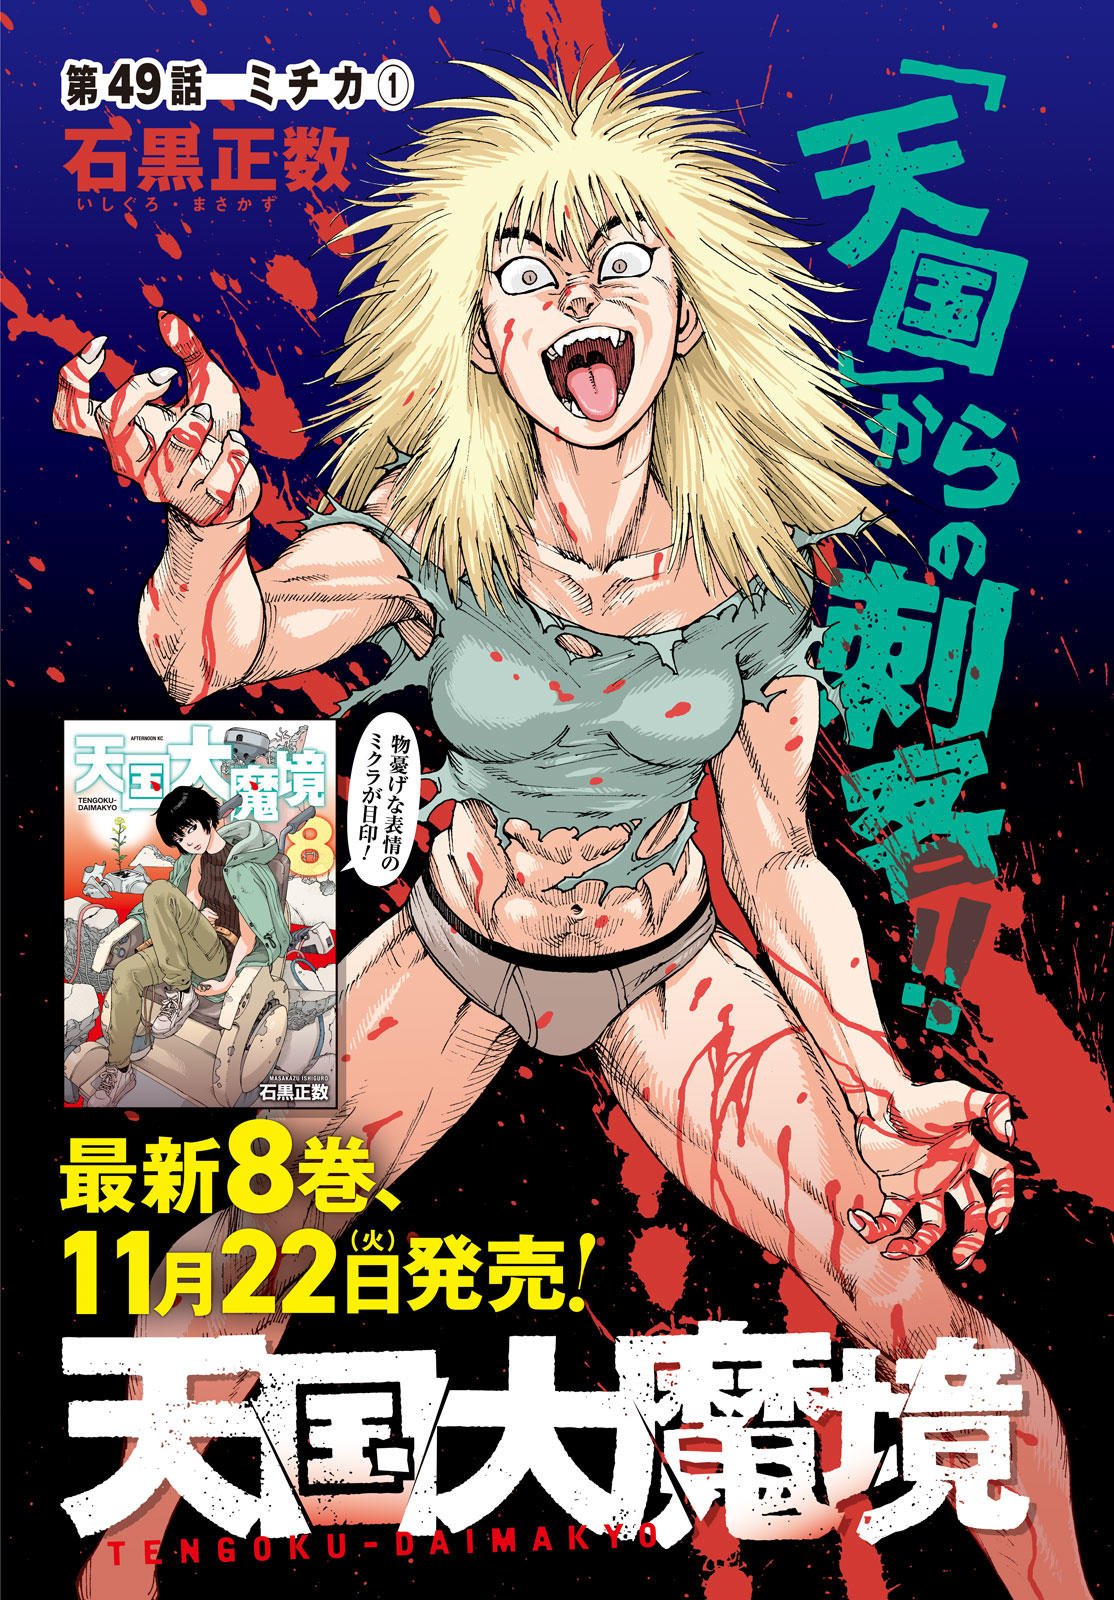 Manga, Tengoku Daimakyou